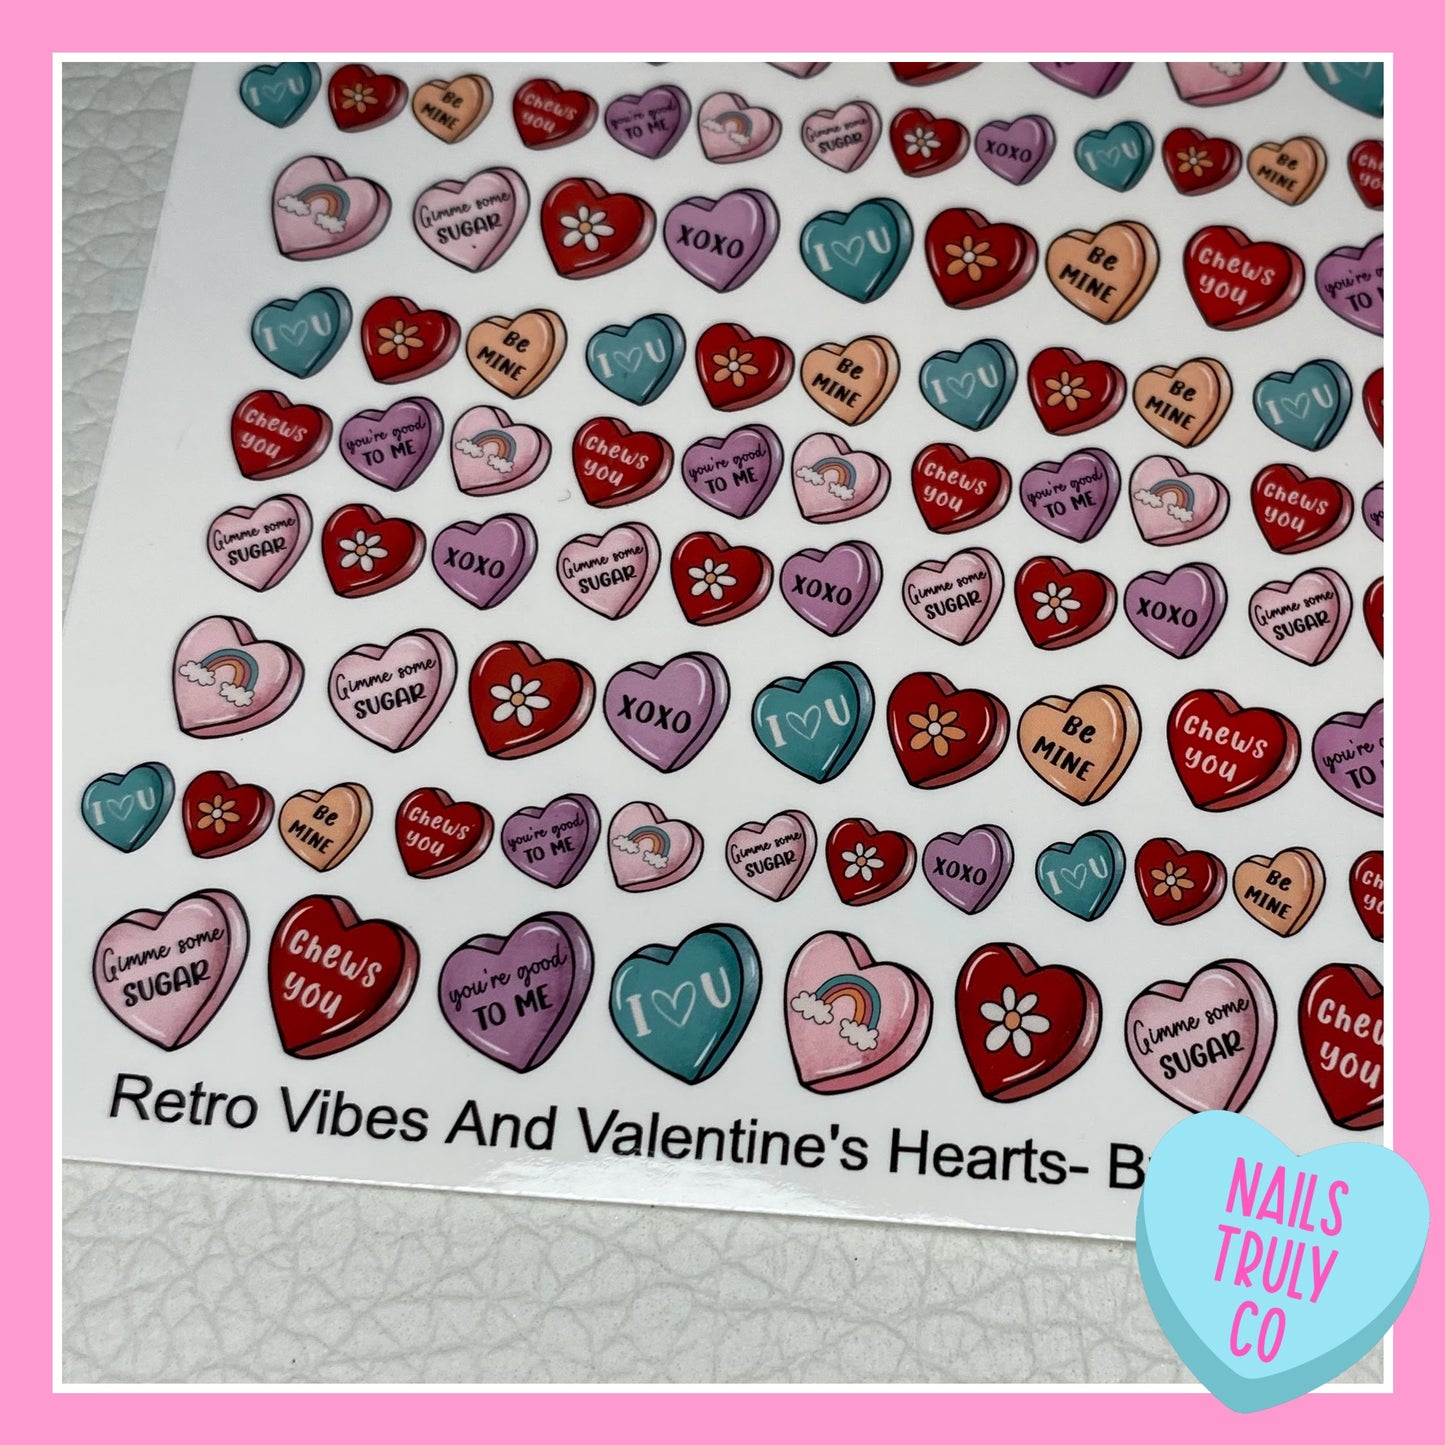 Conversation Hearts- Retro Vibes And Valentine's Hearts